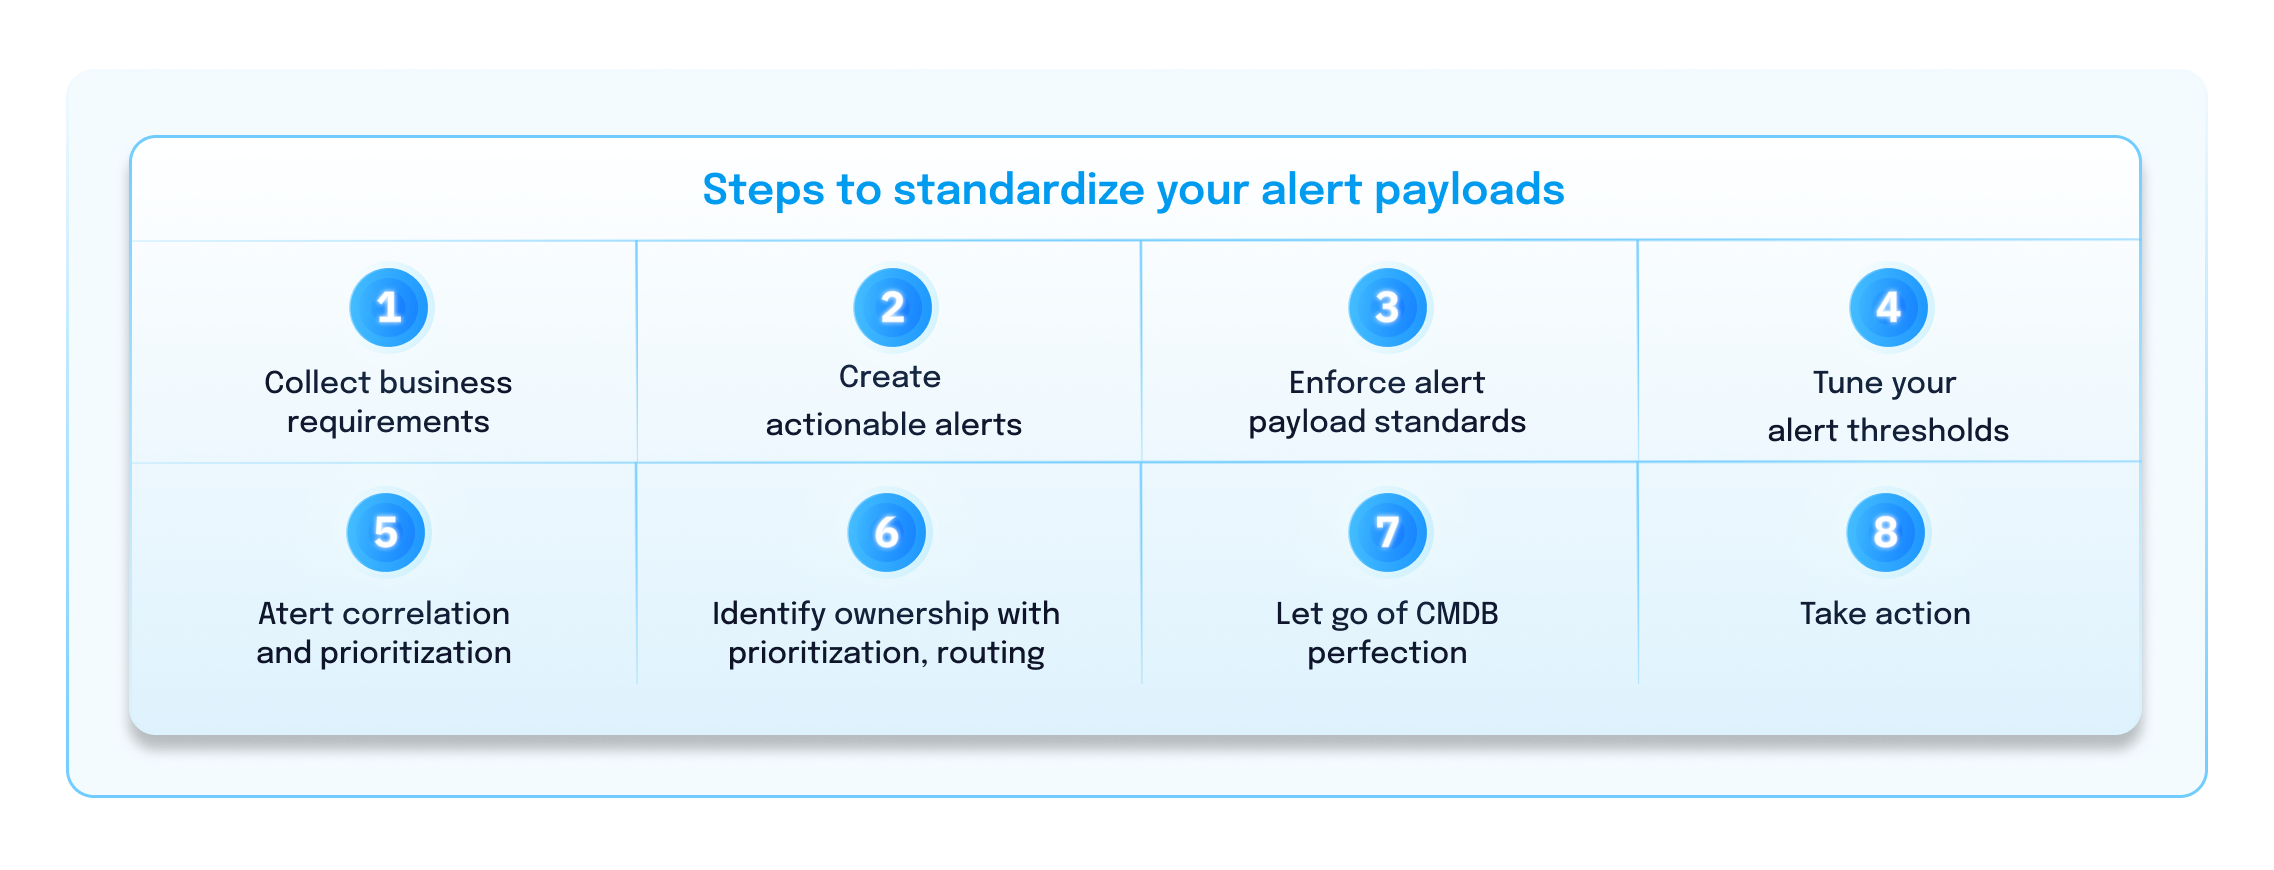 Steps to standardize your alert payloads